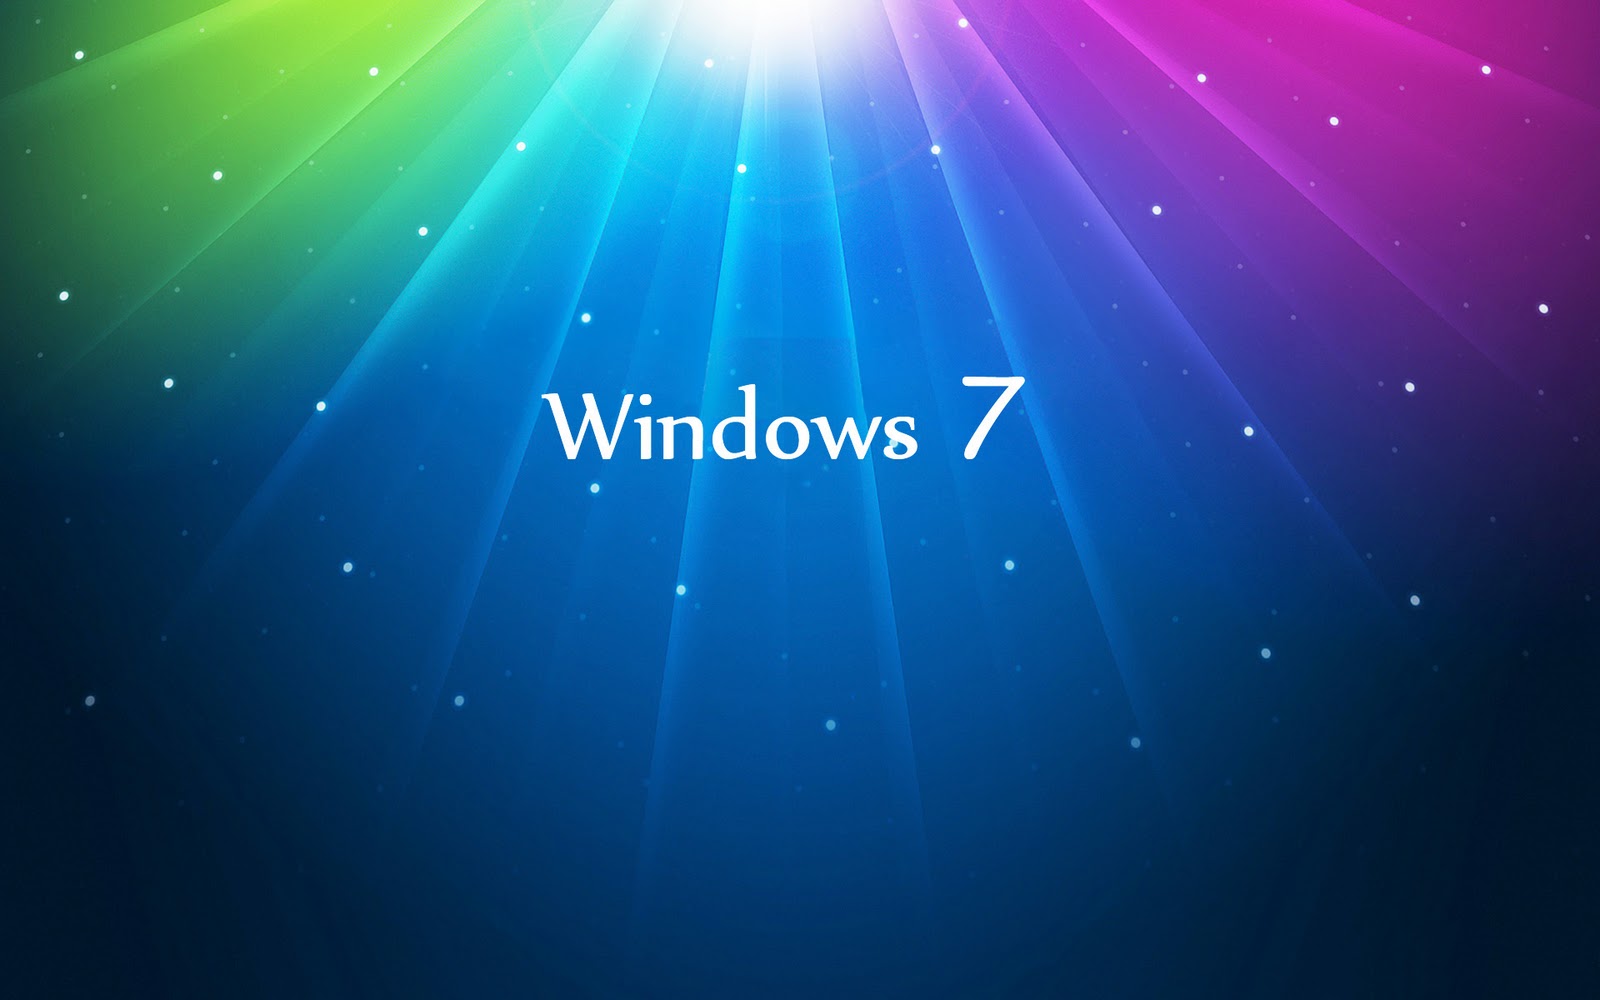 laptop wallpaper hd für windows 7,blau,text,himmel,licht,aqua